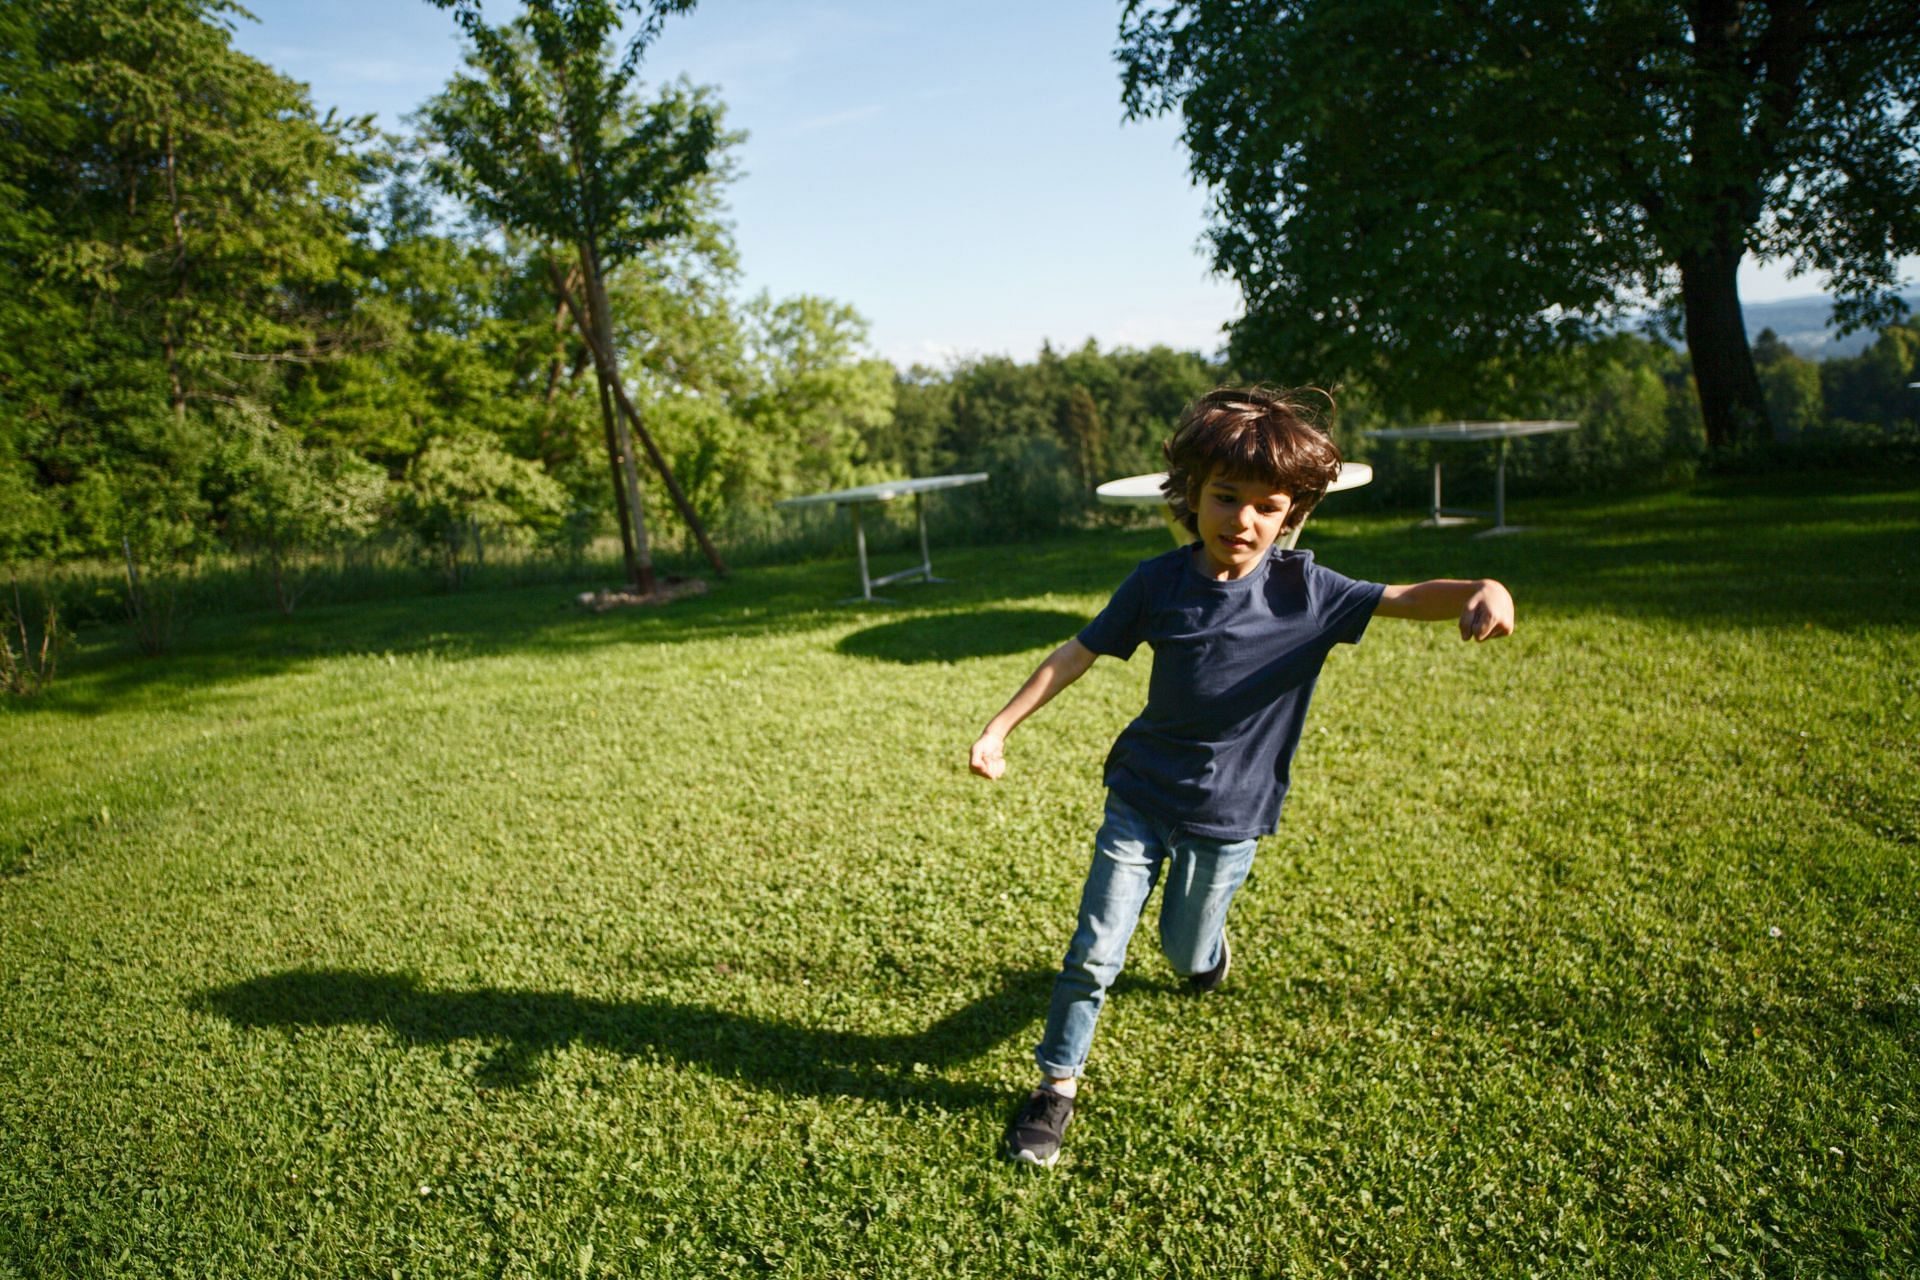 Going outdoors is good for health. (Image via Pexels/ Jonas Mohamadi)